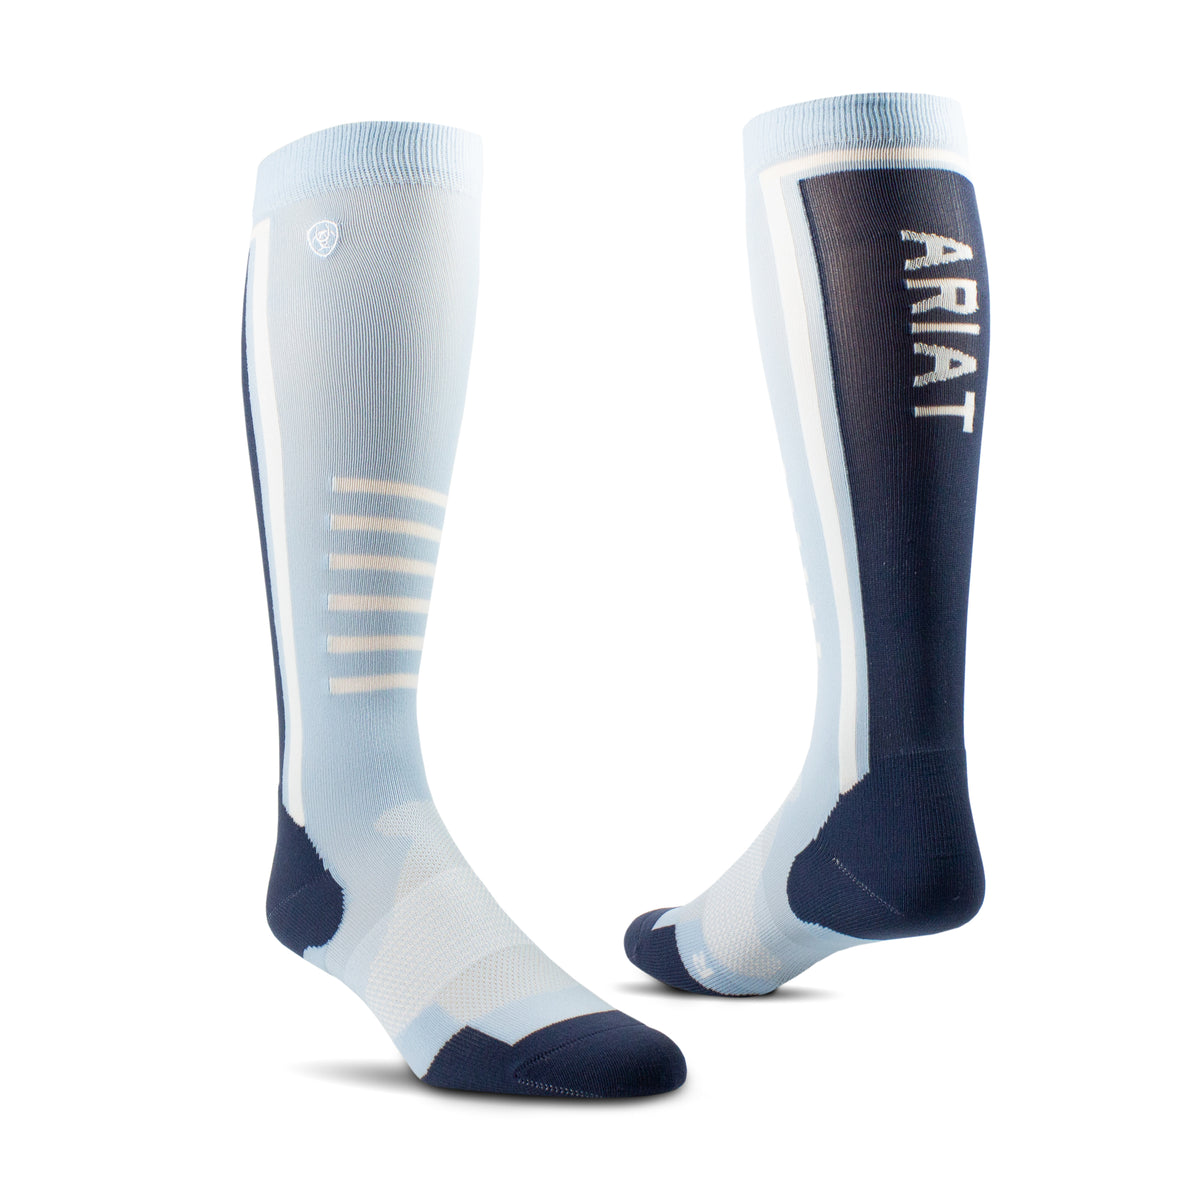 Ariat Uni Ariattek slimline Performance Socks - Cote Dazur/Sargasso Sea